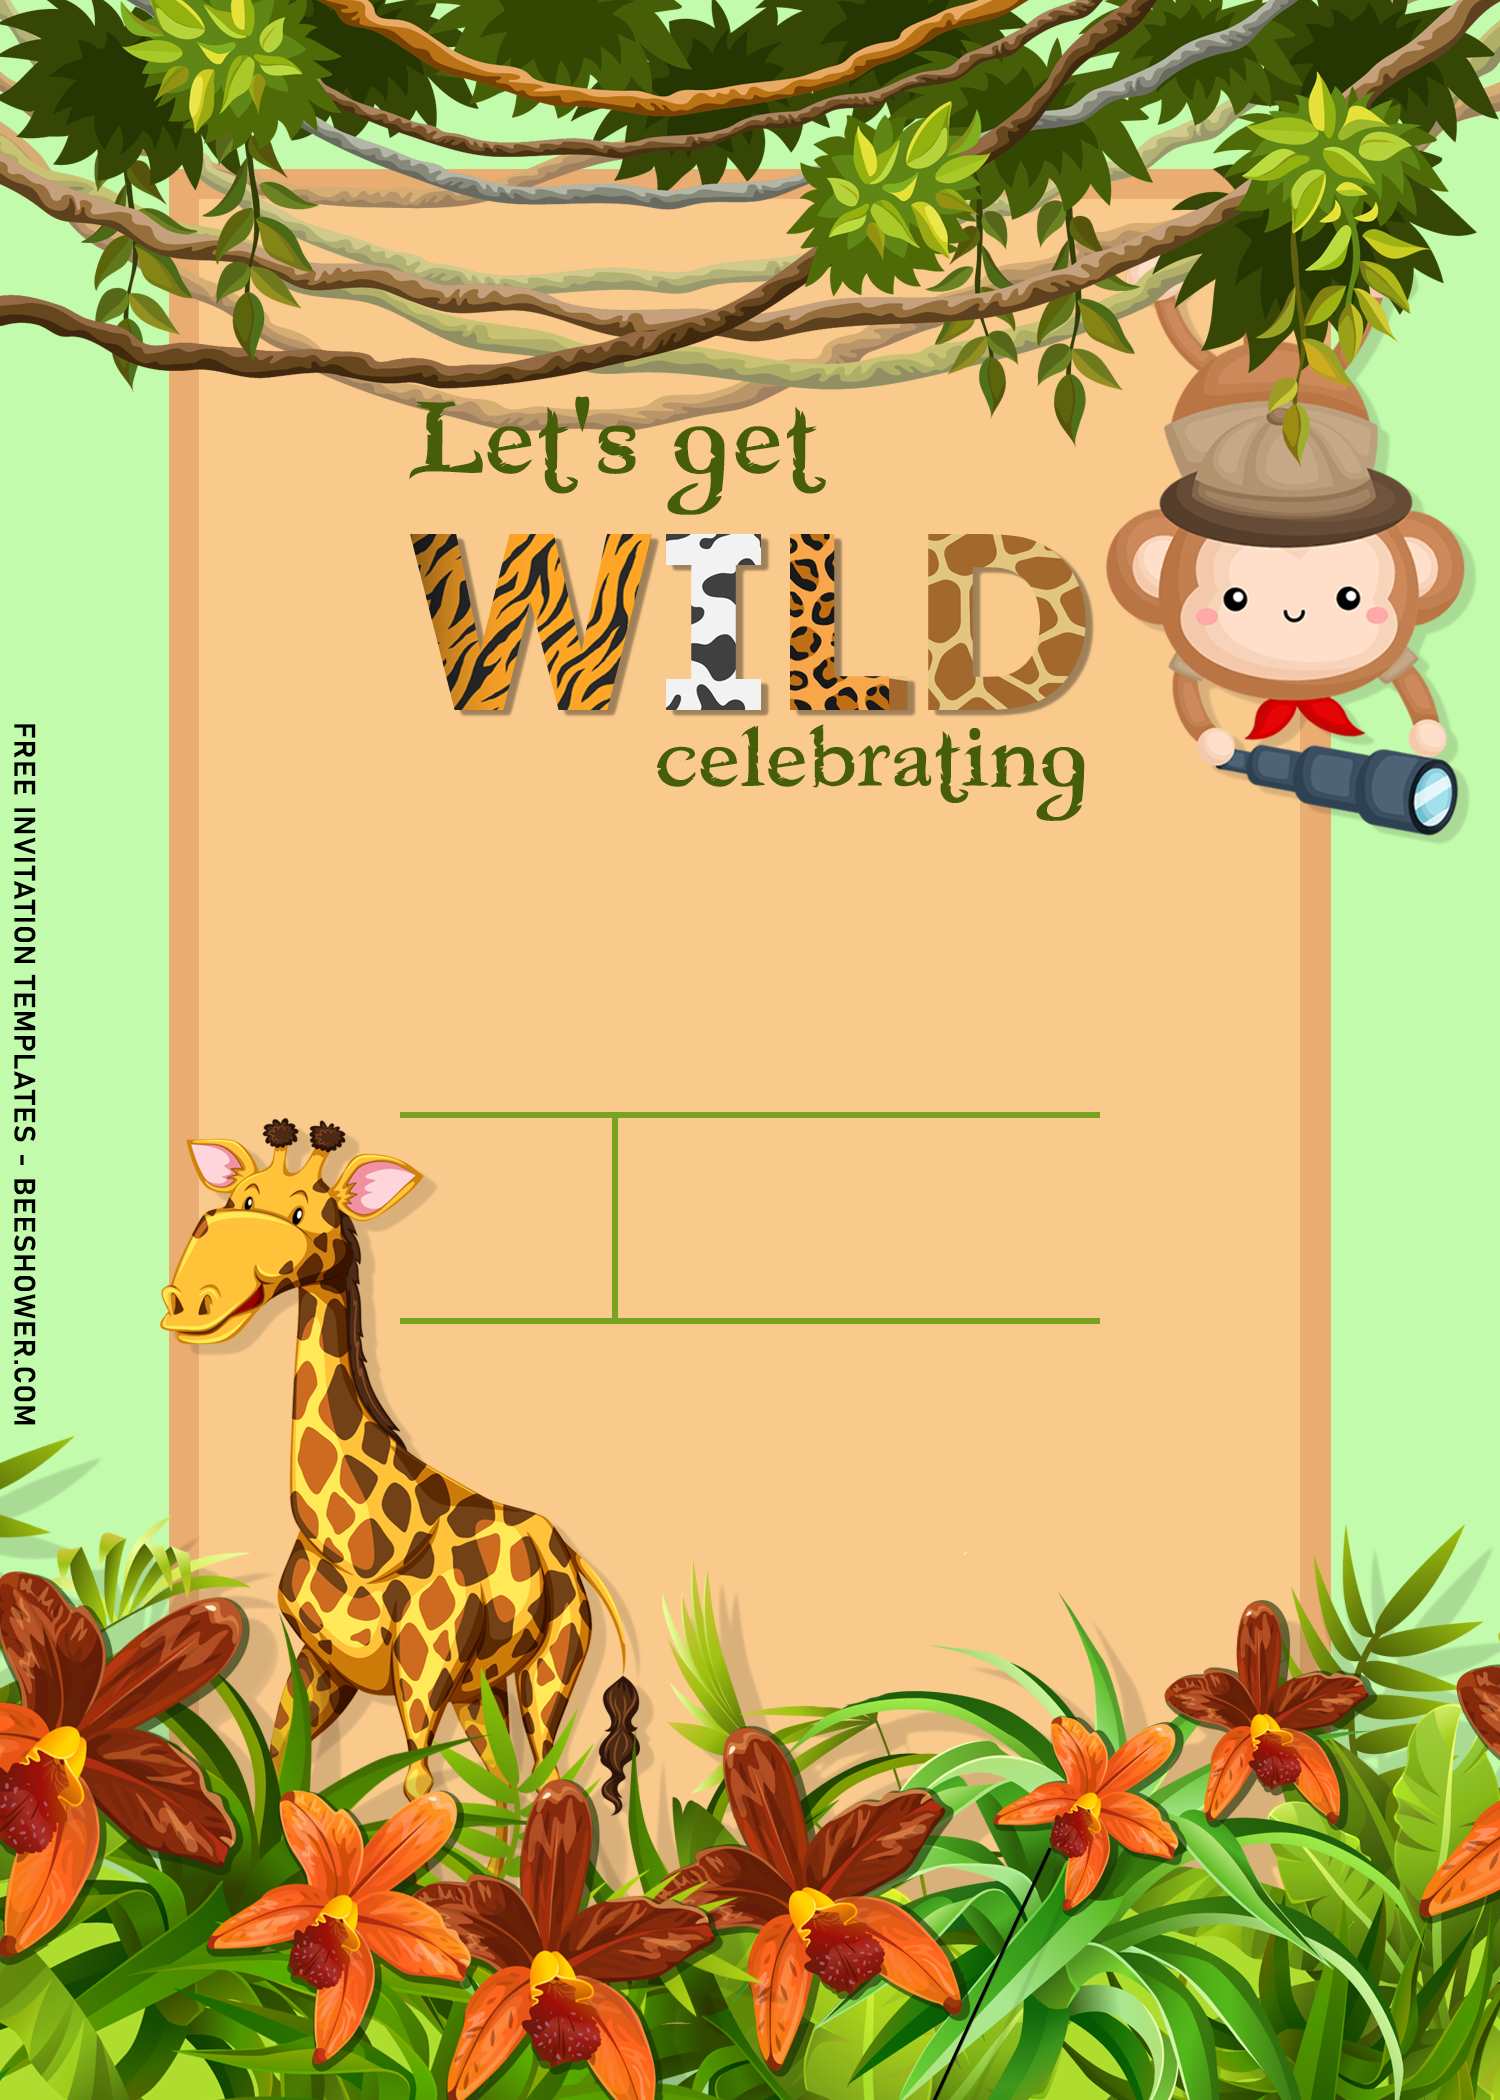 download-image-of-11-safari-animals-themed-birthday-invitation